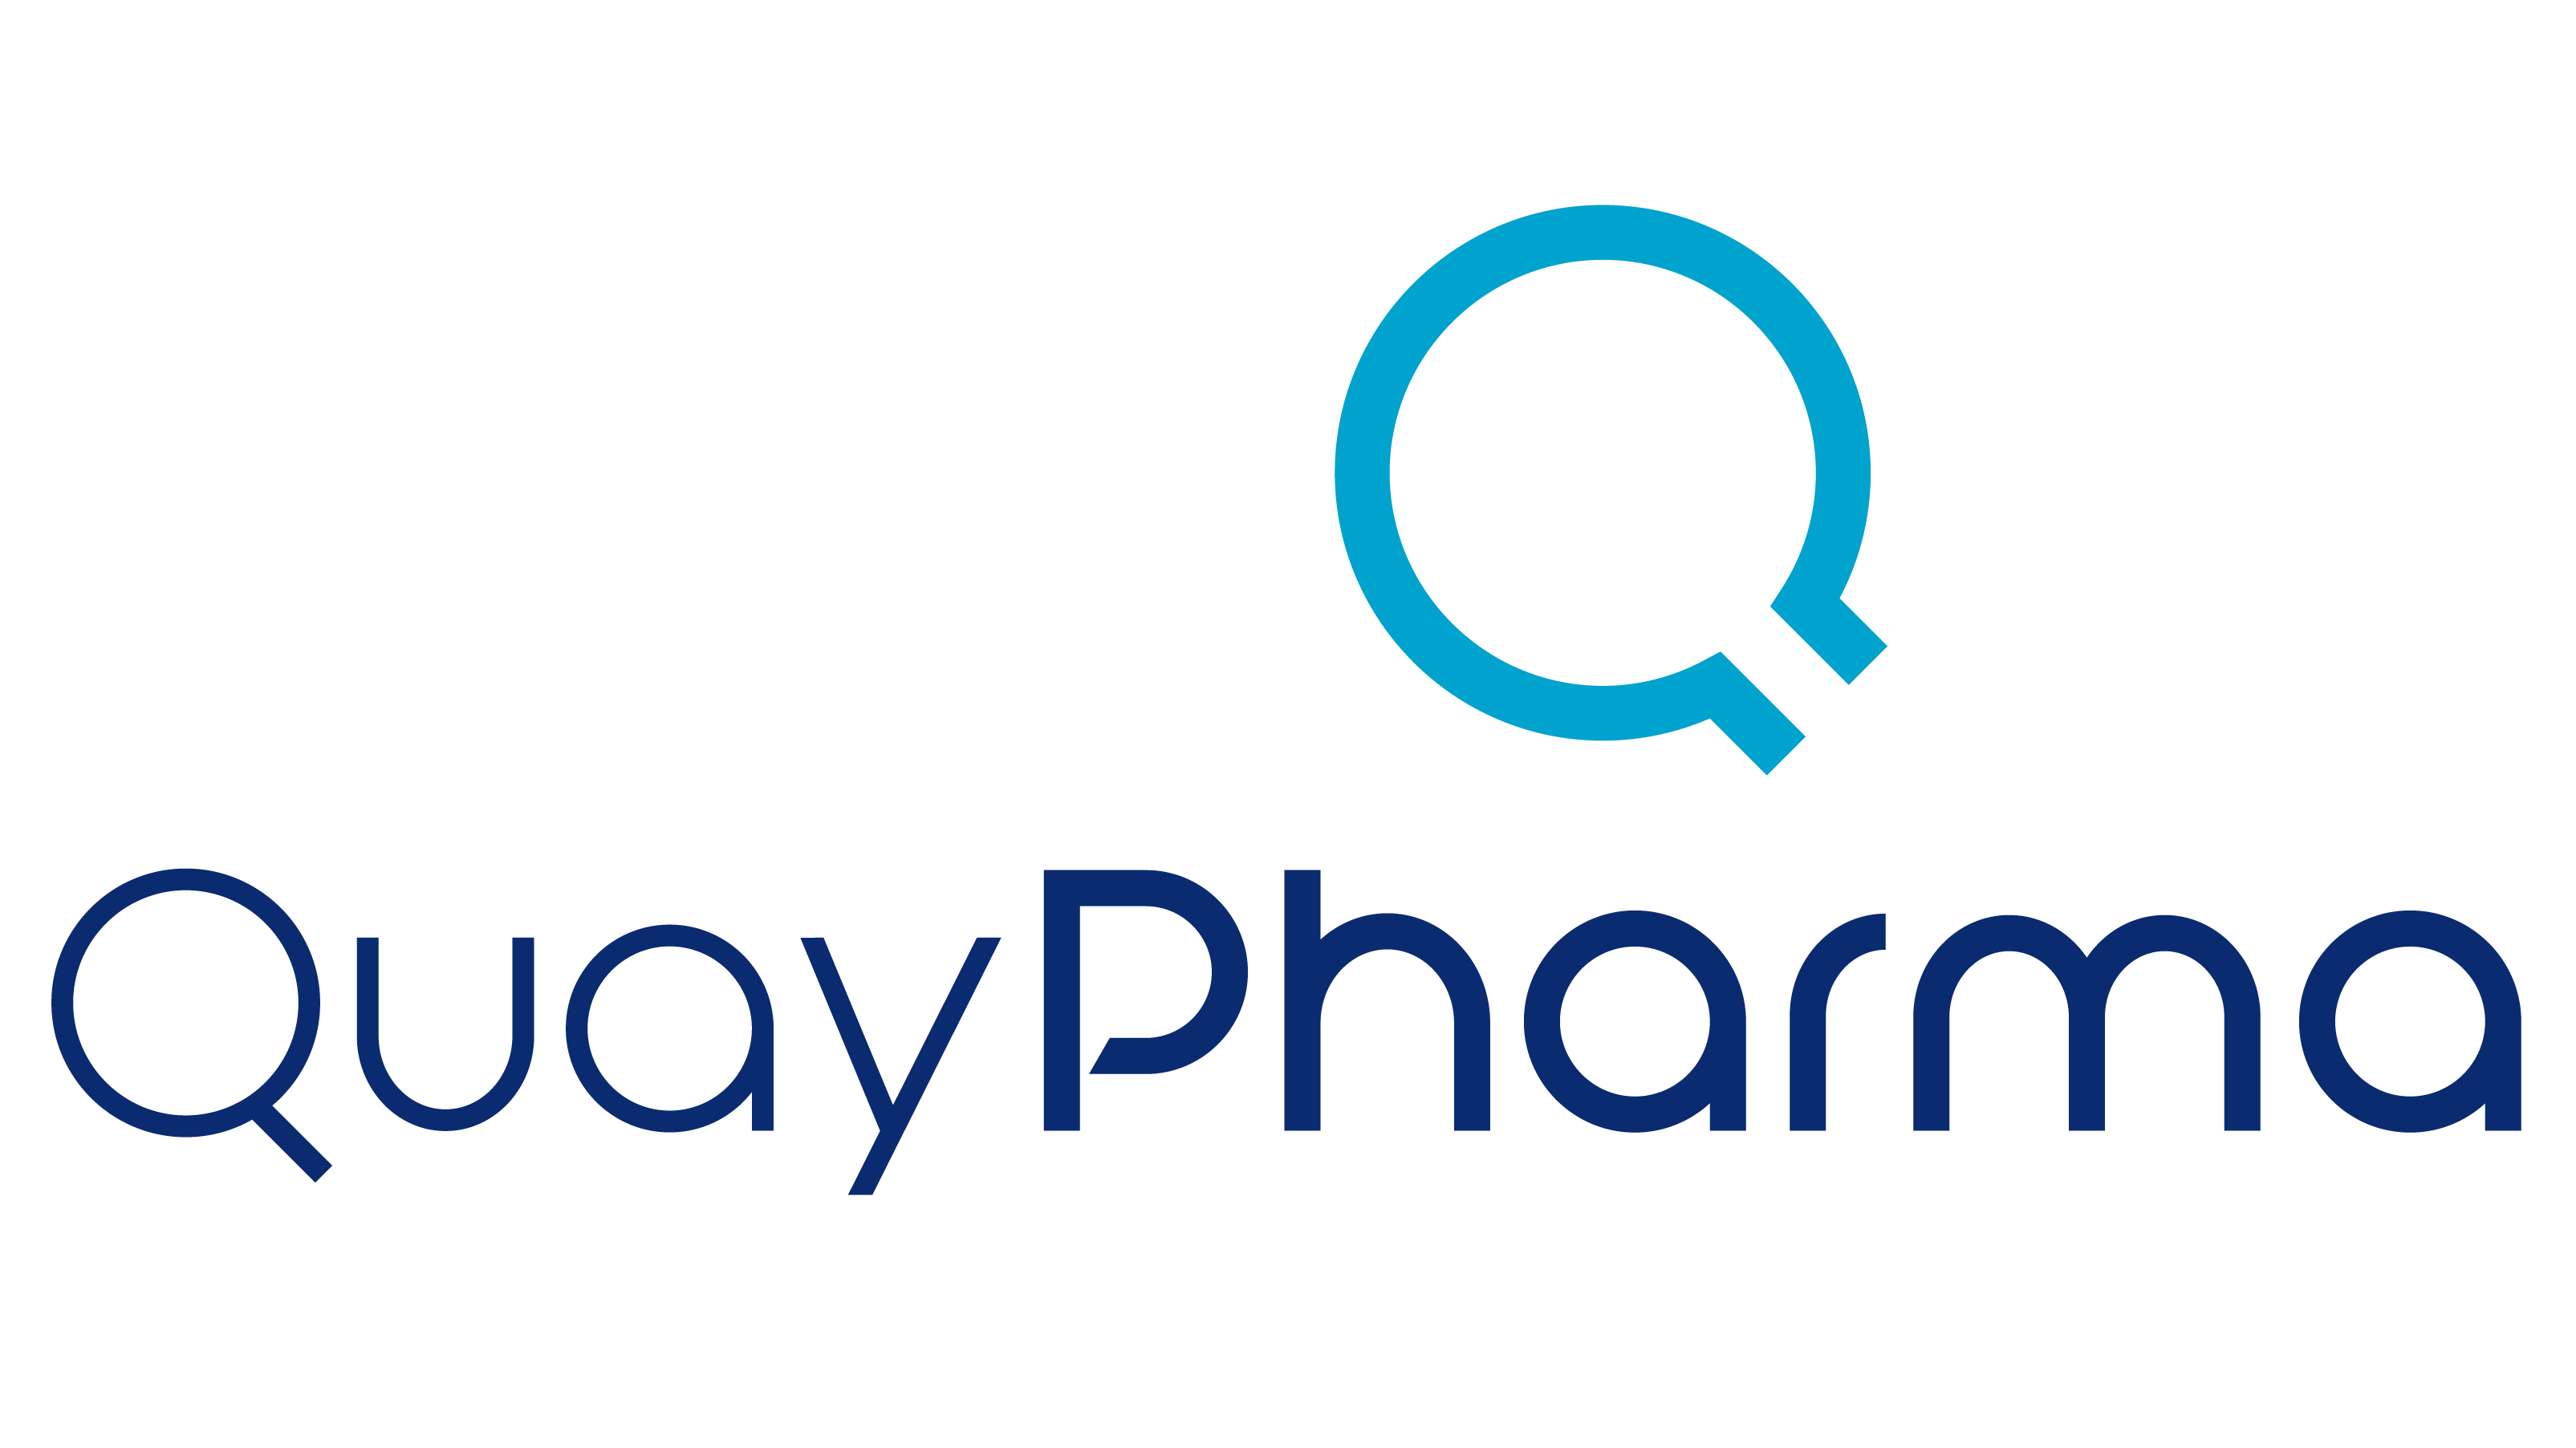 Quay-Pharma-logo-01